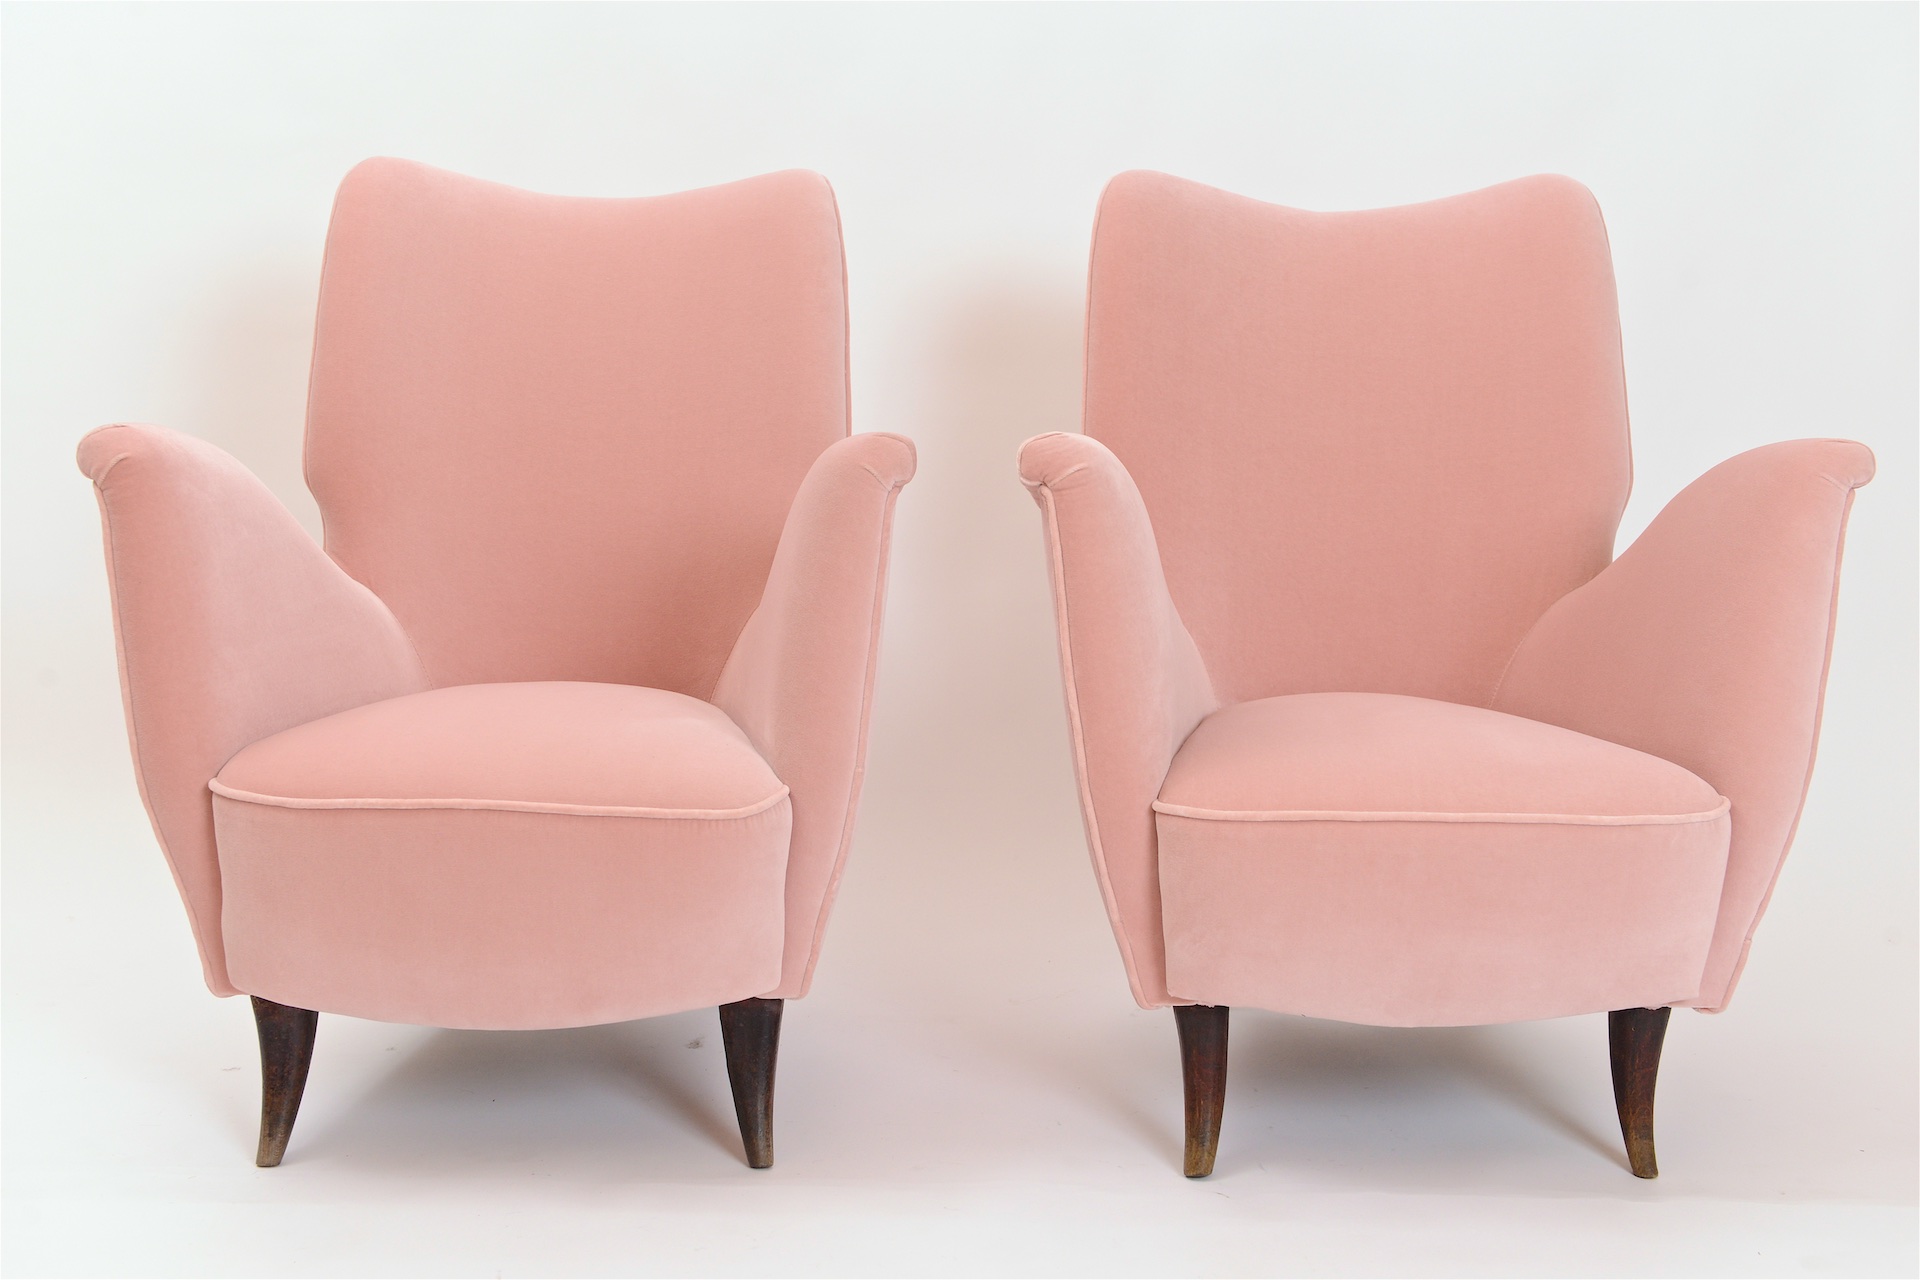 Pair of pink velvet upholstered armchairs